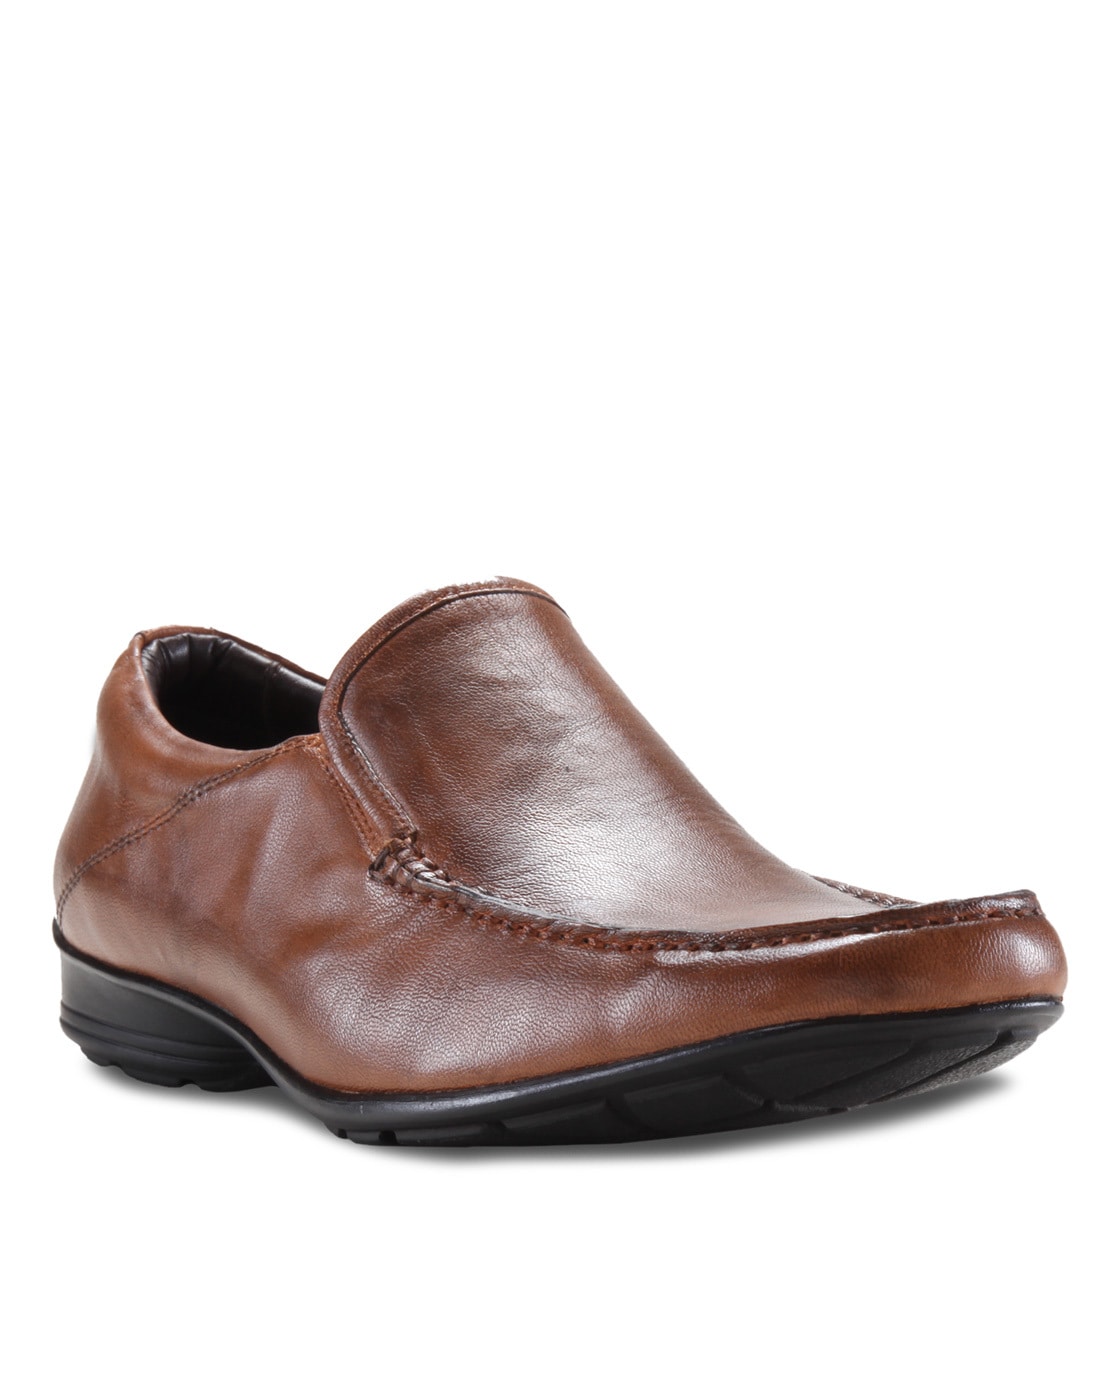 franco leone men's formal shoes